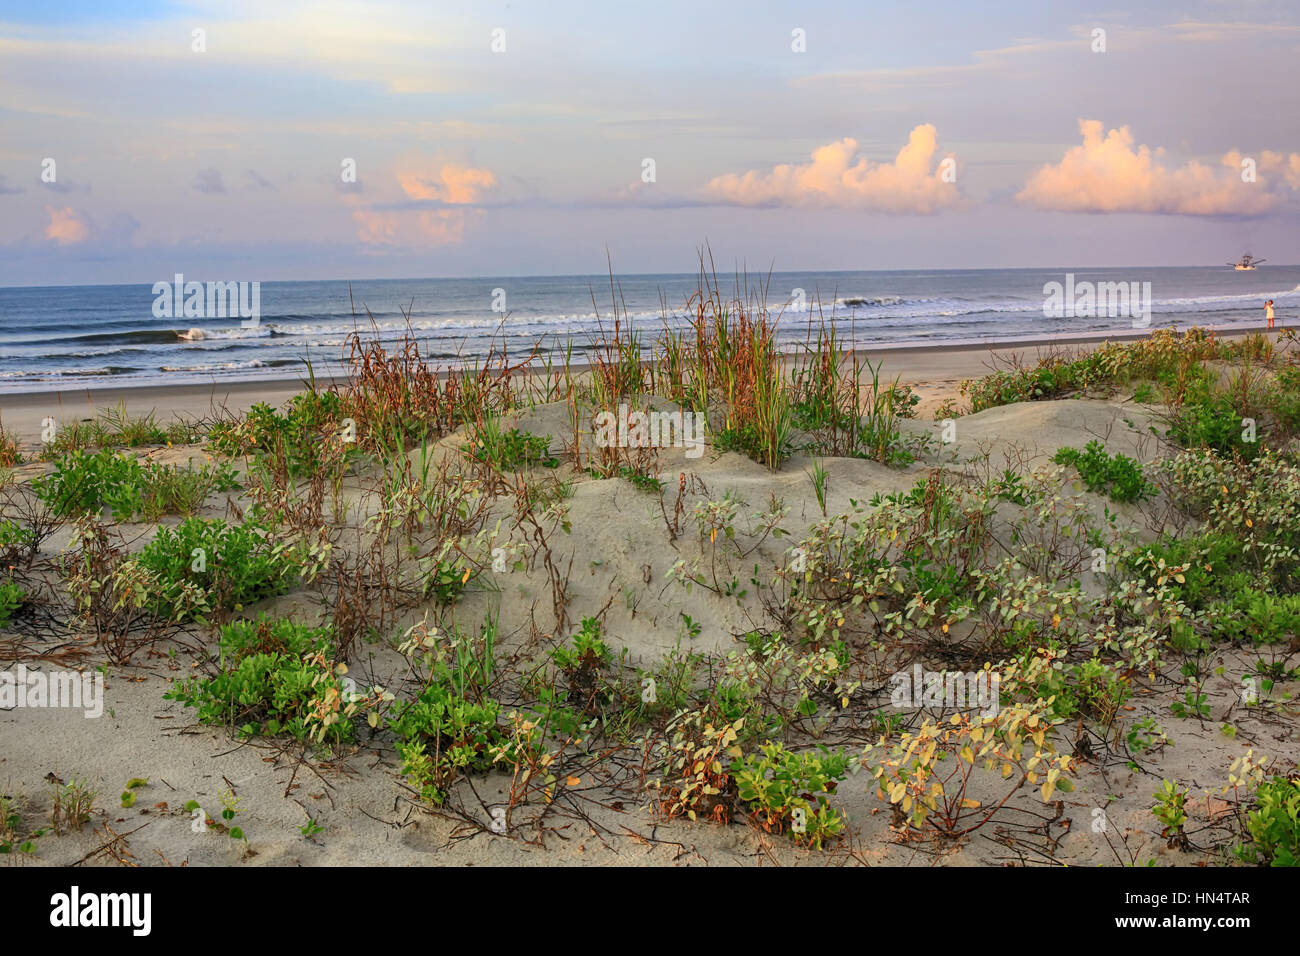 Sunrise at the dunes of the beach at Kiawah Island, South Carolina. Stock Photo